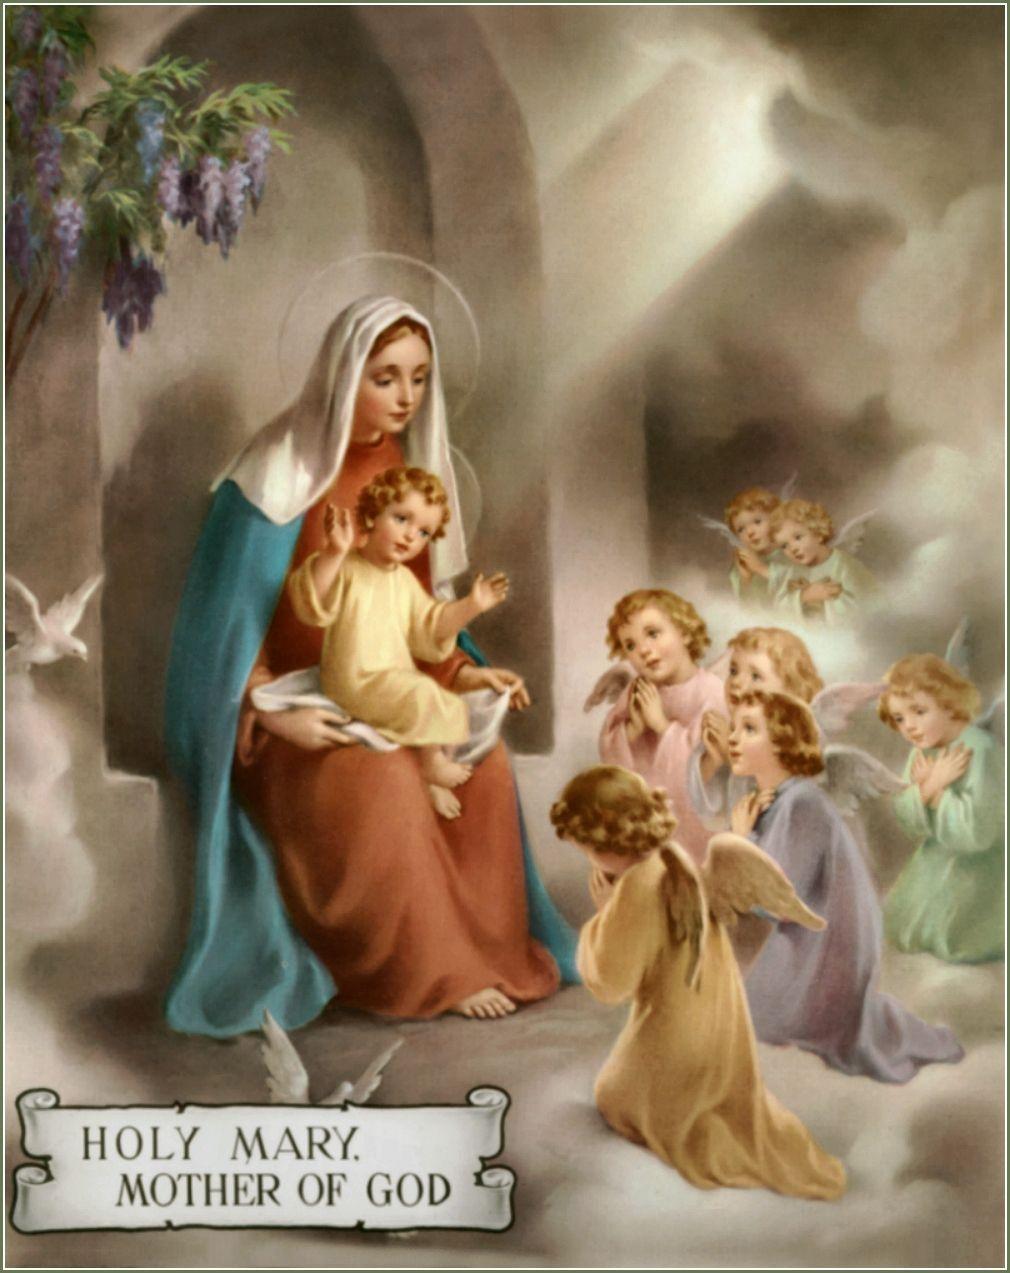 Hail Mary through picture. Holy Mary Mother of God. My Faith, My